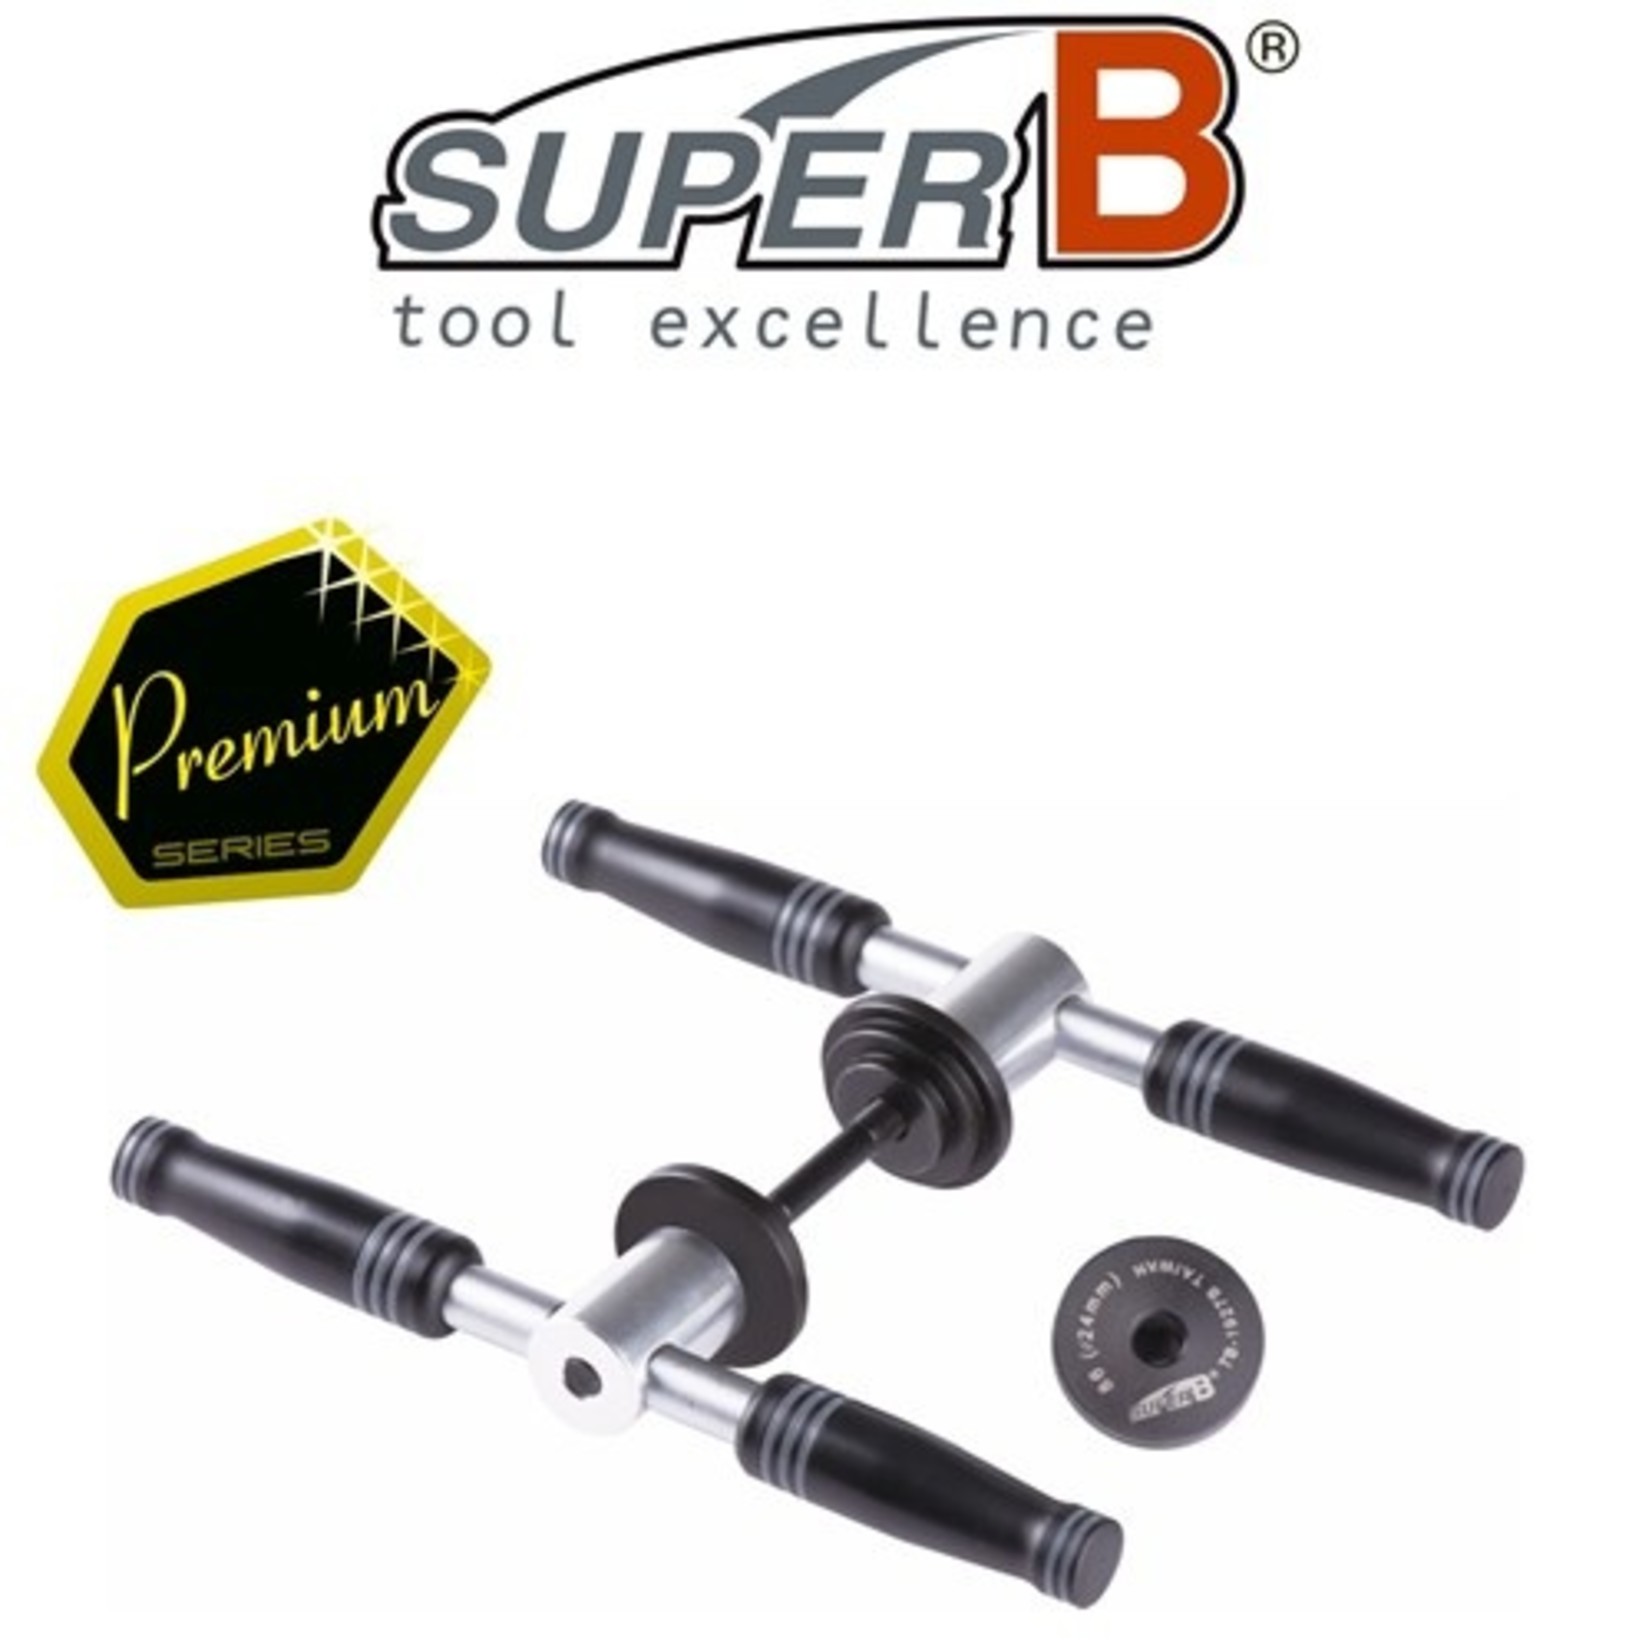 Super B SuperB Bottom Bracket Installation Tool - BB86 Bearings - Premium Series